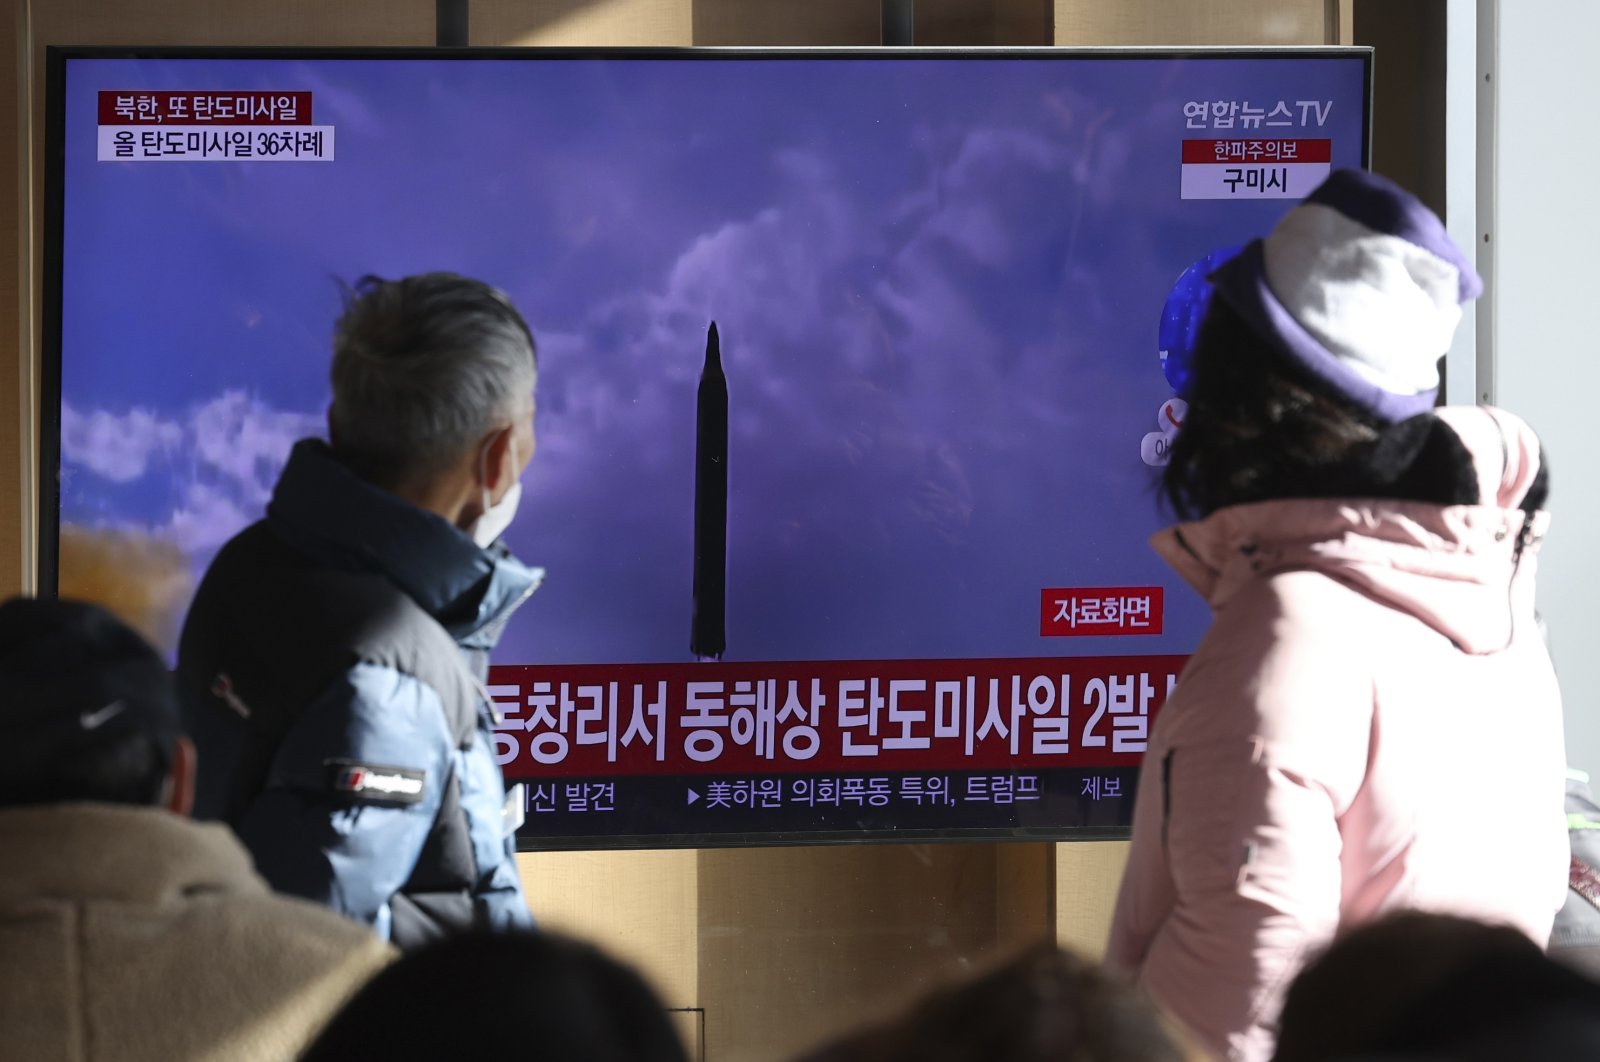 Korea Utara menembakkan 2 rudal balistik berkemampuan nuklir yang meningkatkan ketegangan